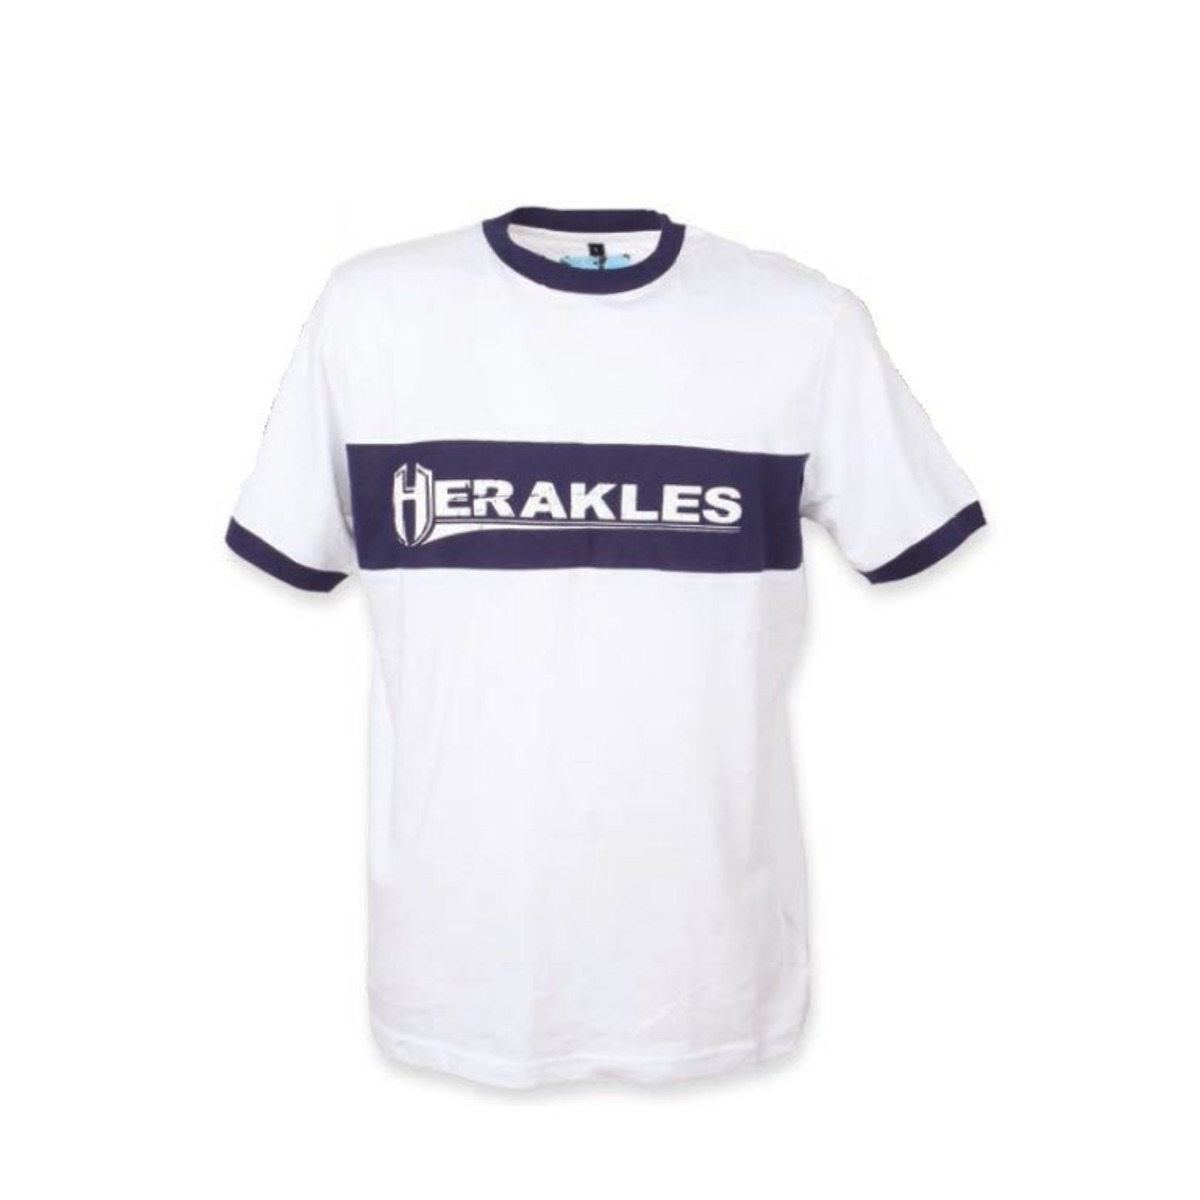 Herakles T-Shirt Bianca-Blu - XL